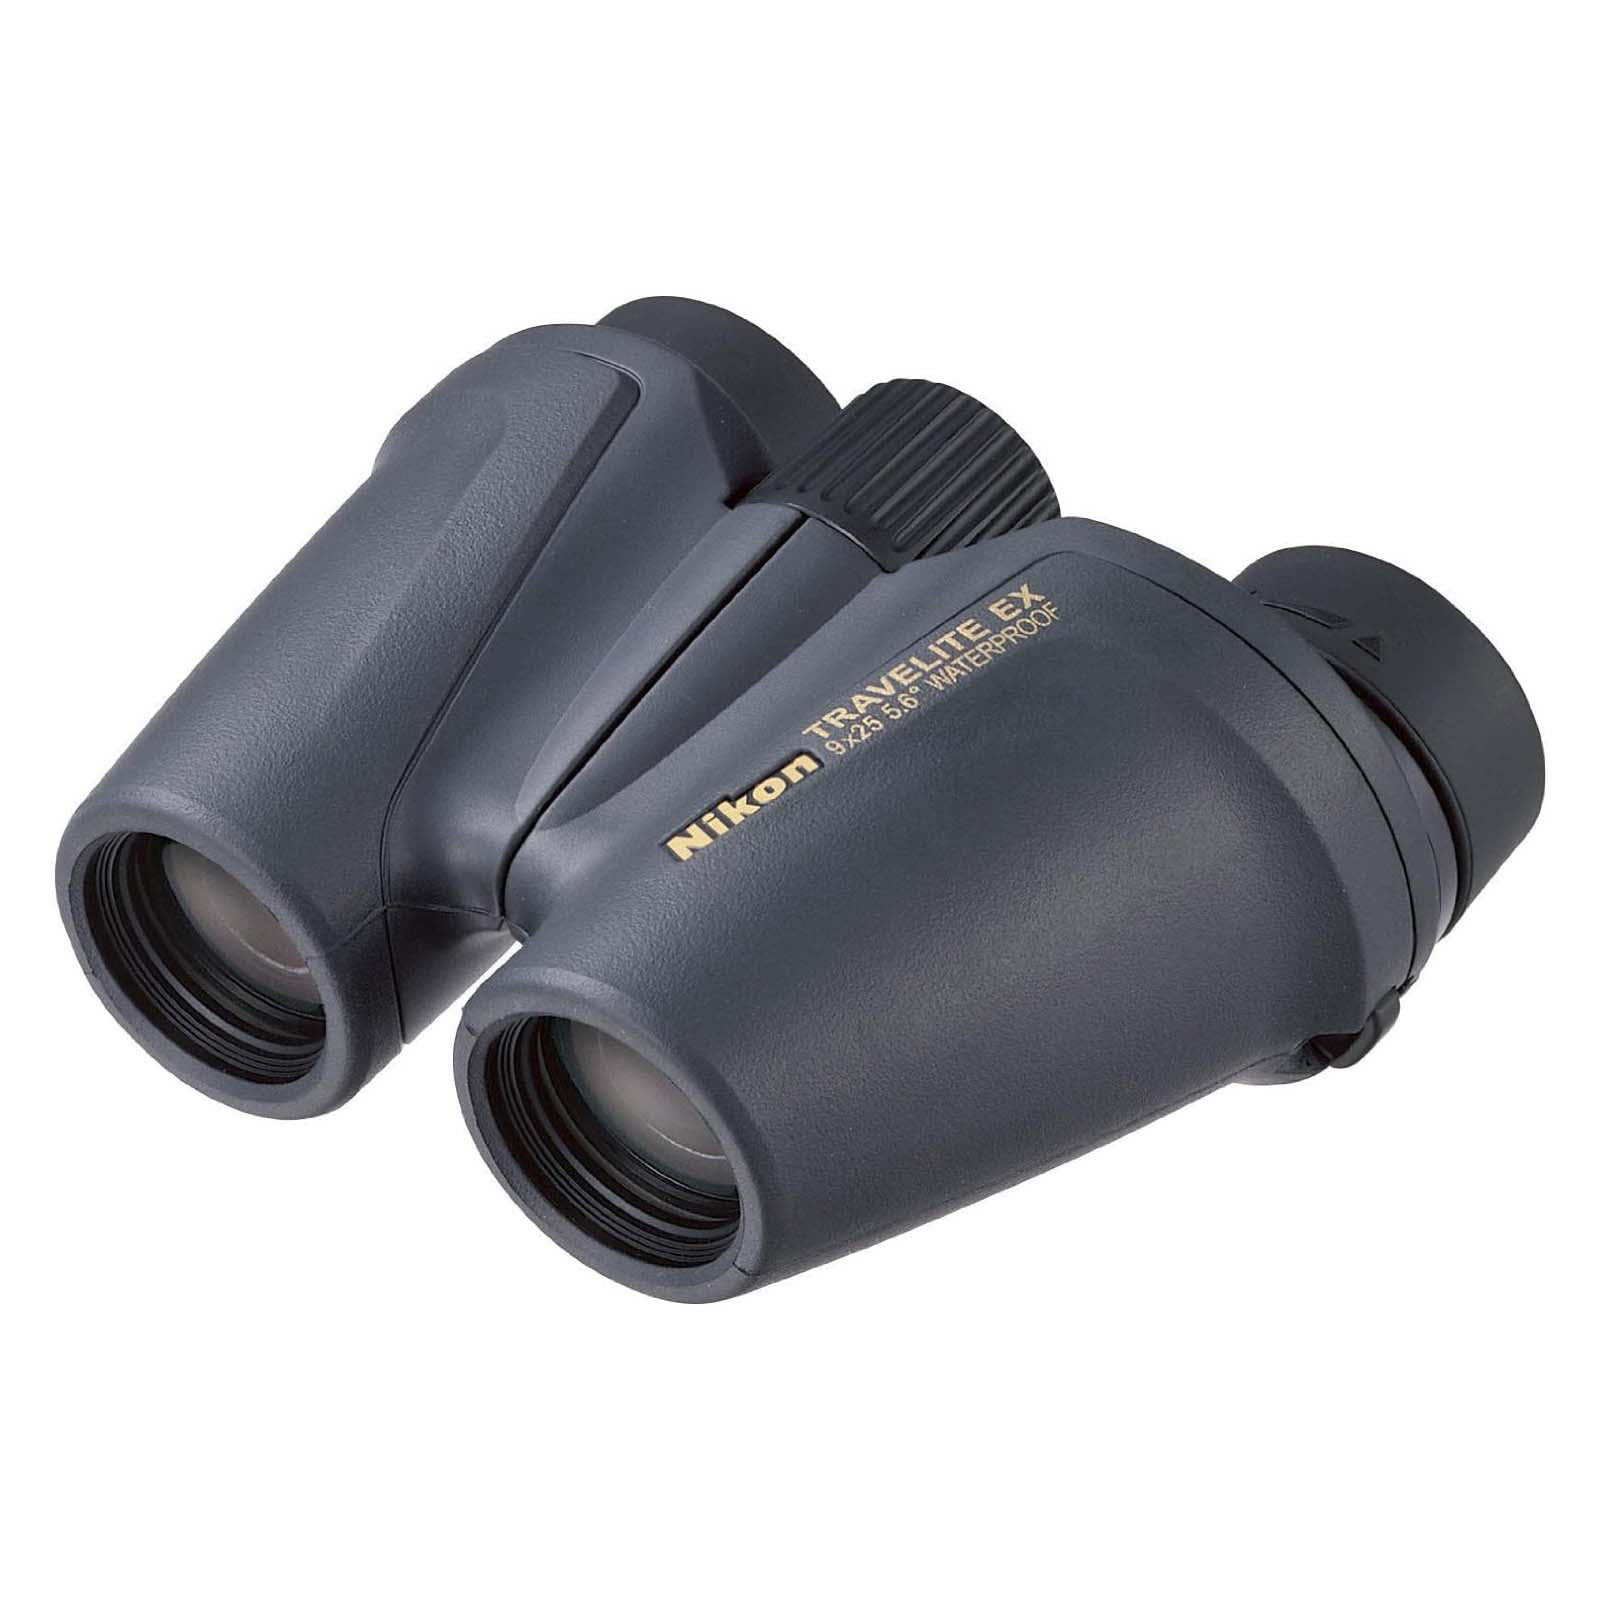 Nikon Travelite EX 9x25 Binoculars